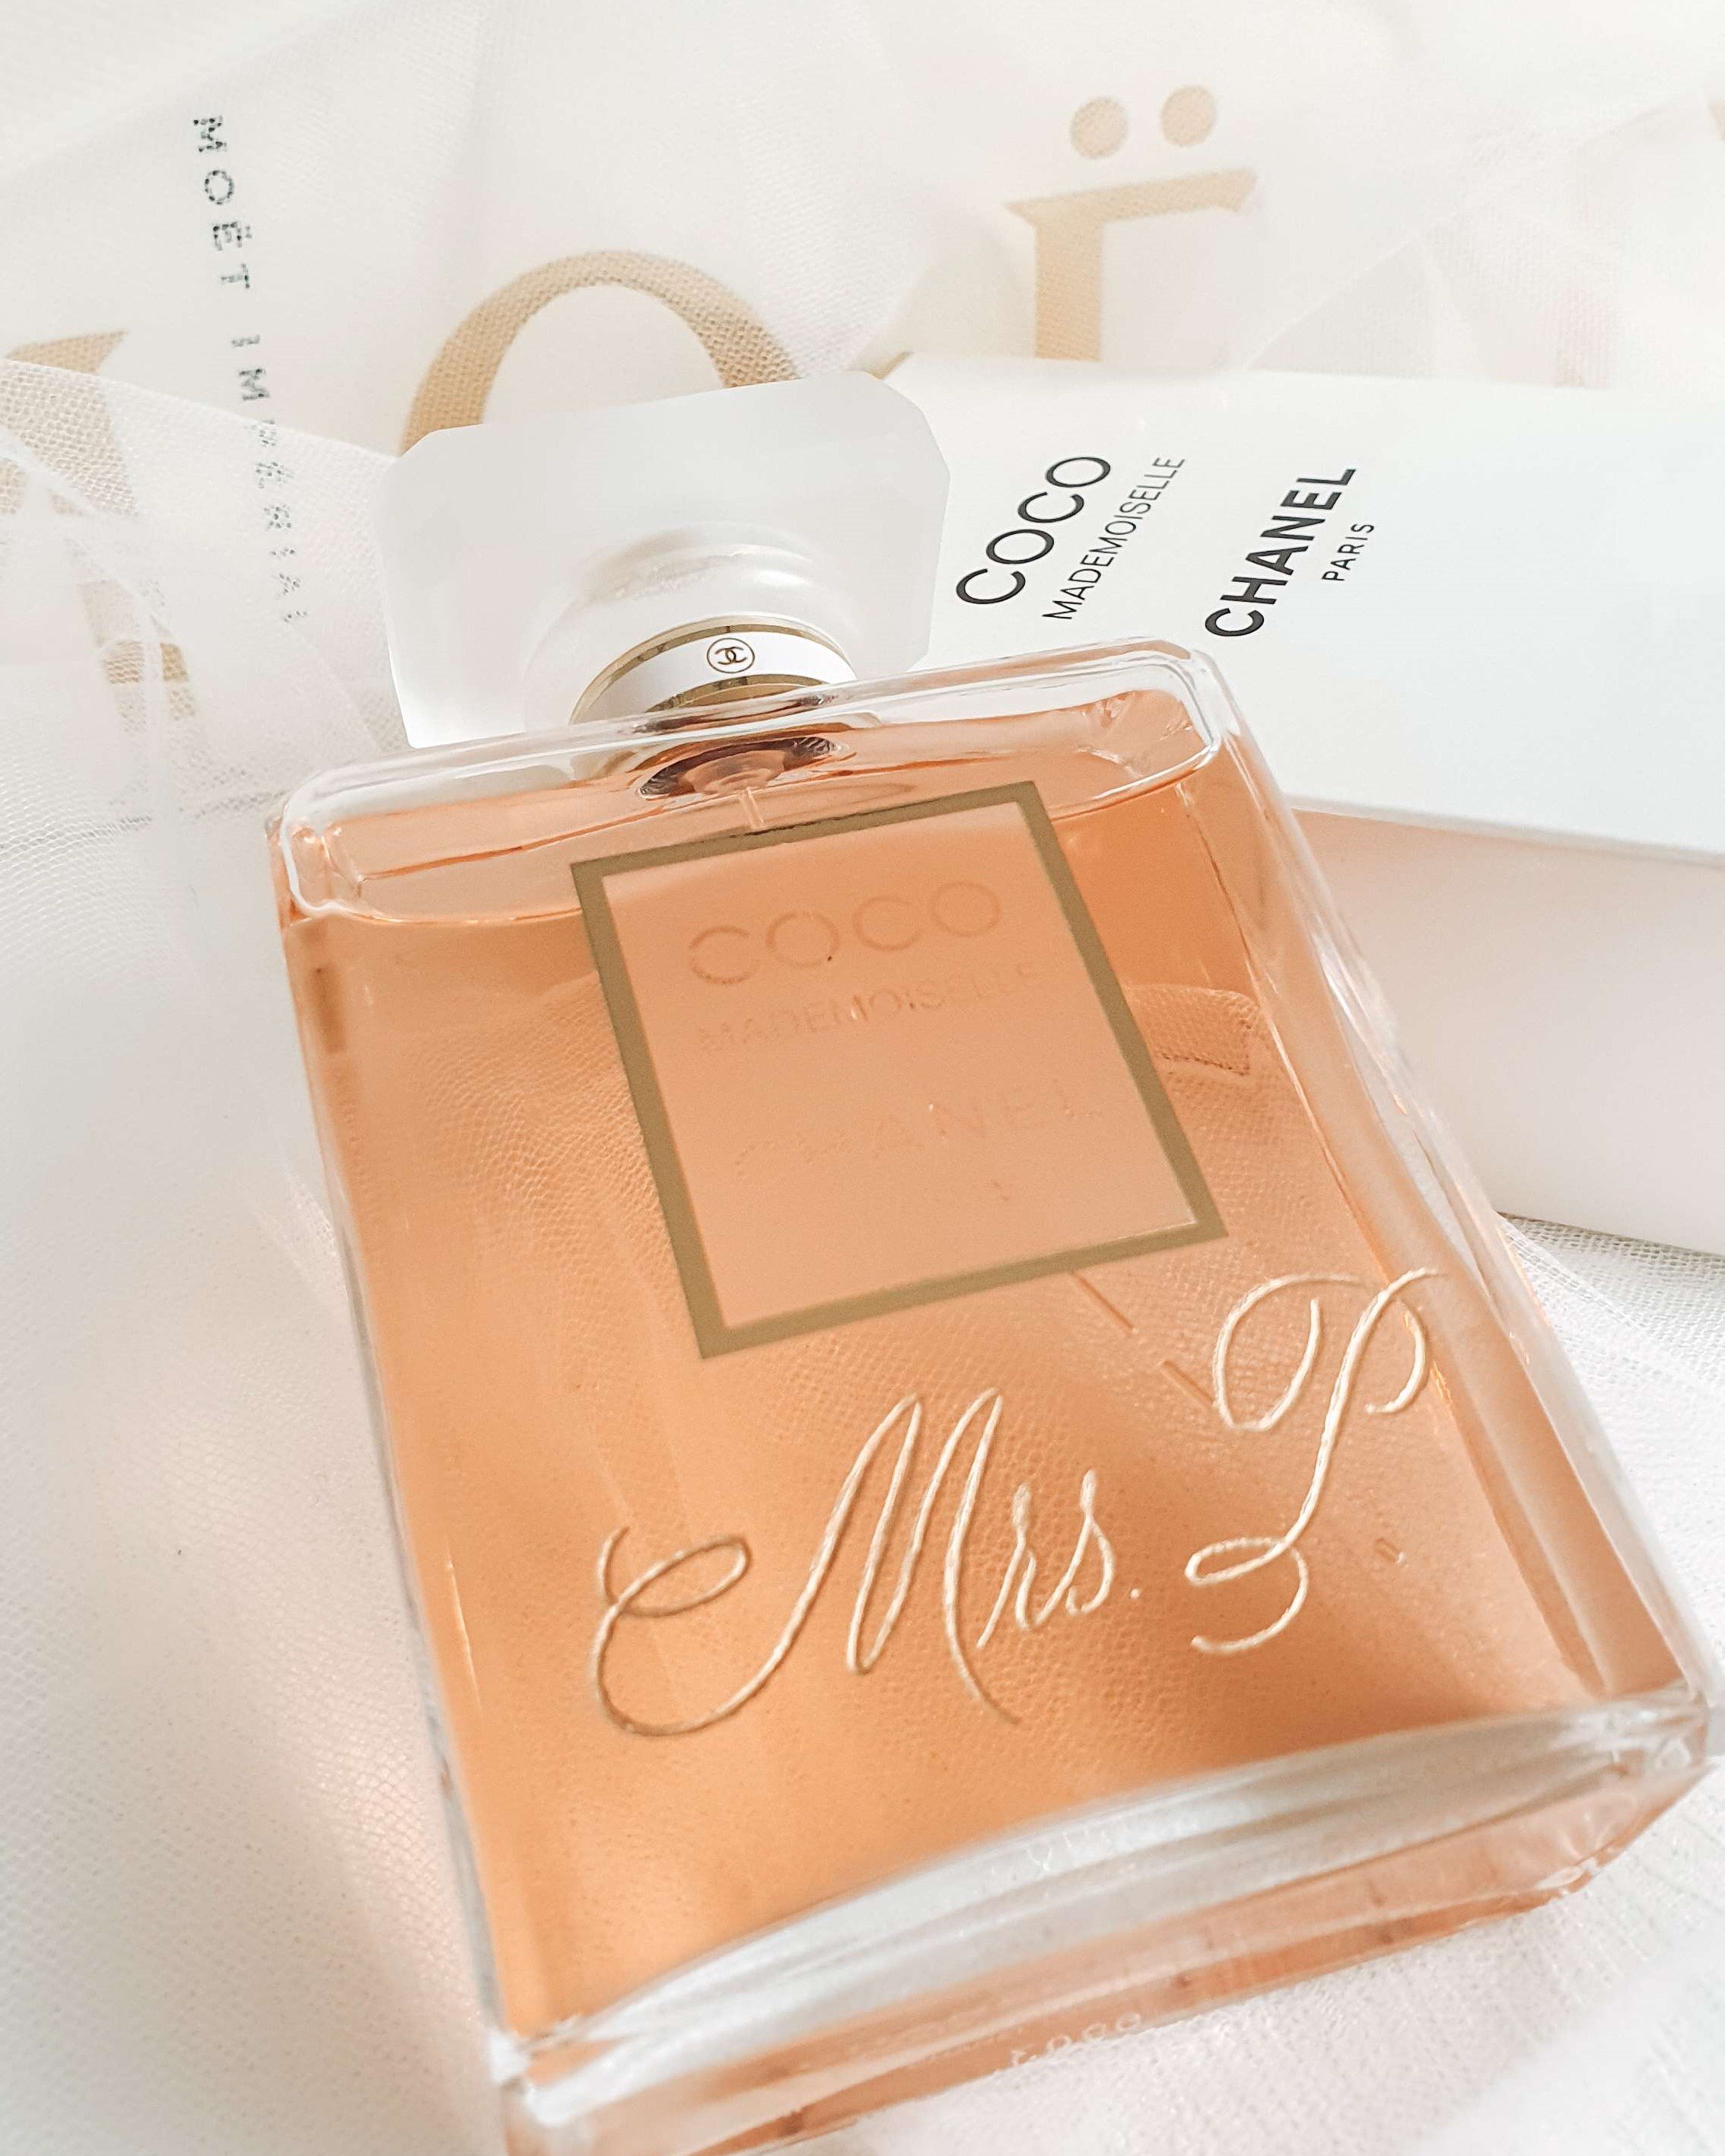 hand-engraved-coco-mademoiselle-chanel-perfume.jpg